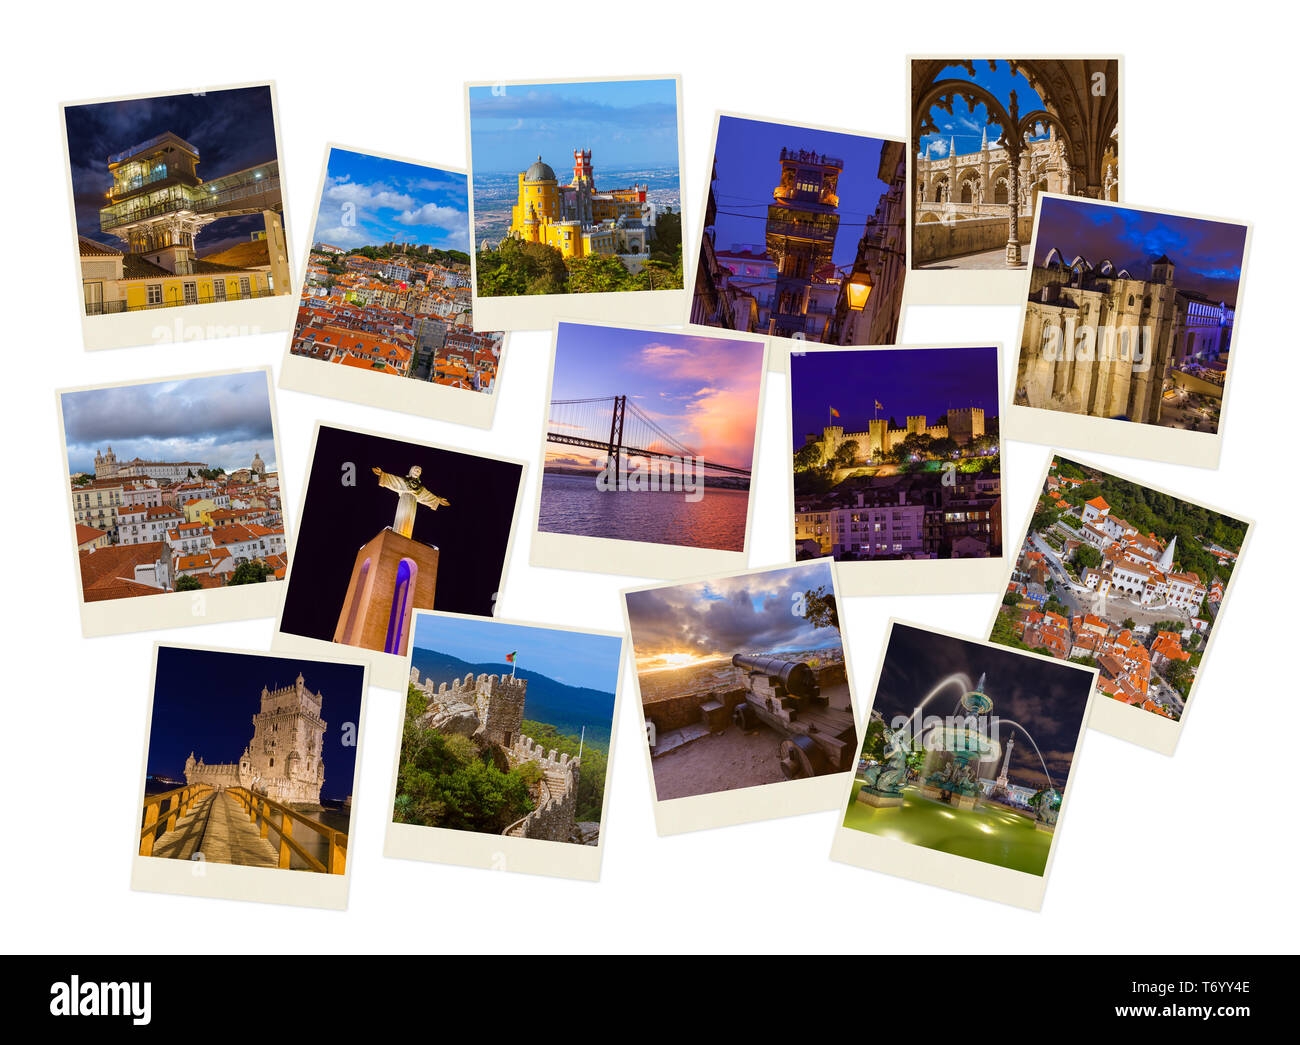 Lisbon Portugal travel images (my photos) Stock Photo